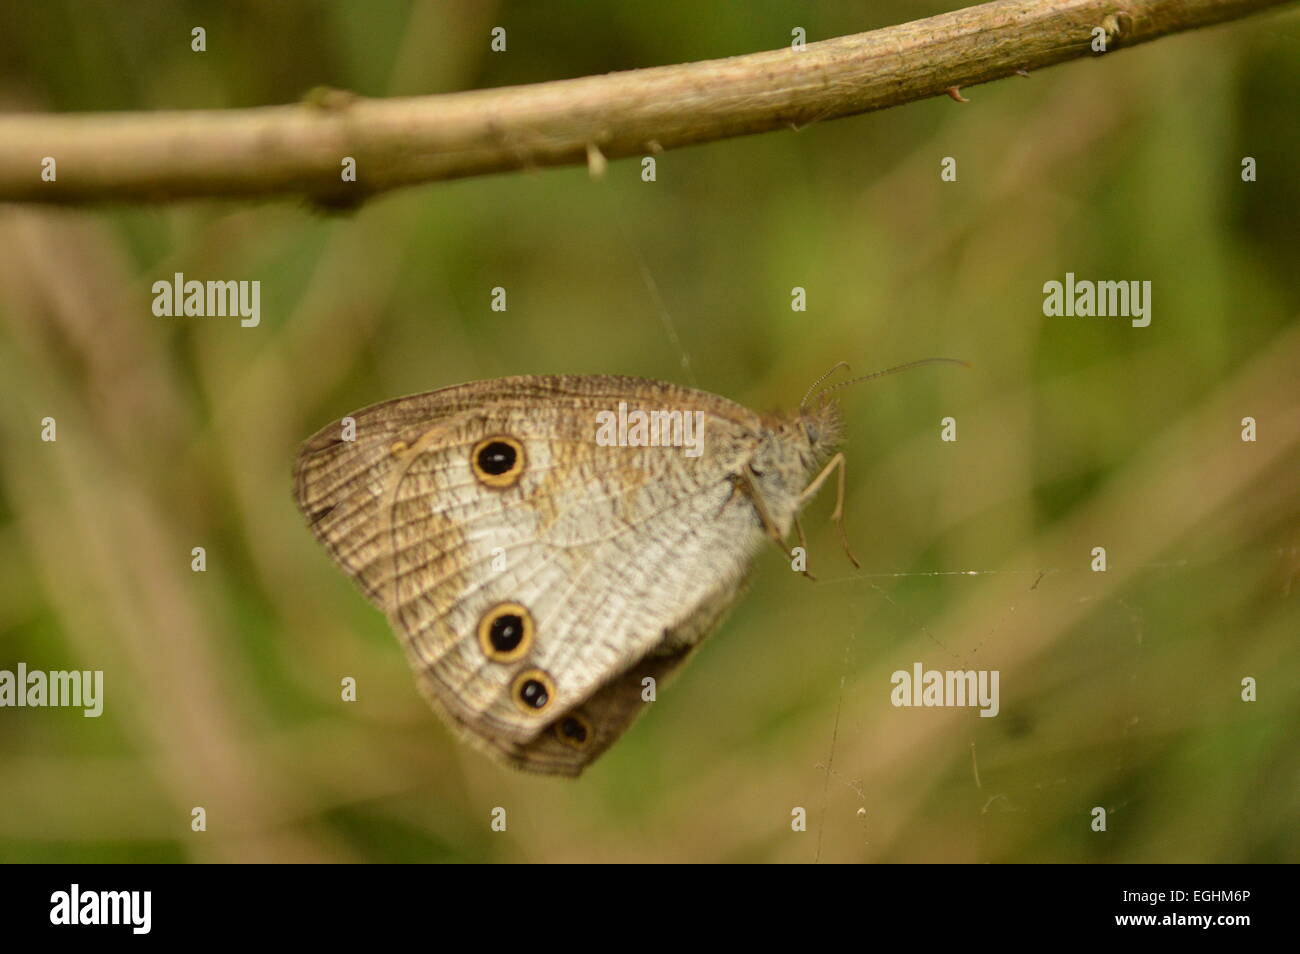 a butterfly on a net Stock Photo